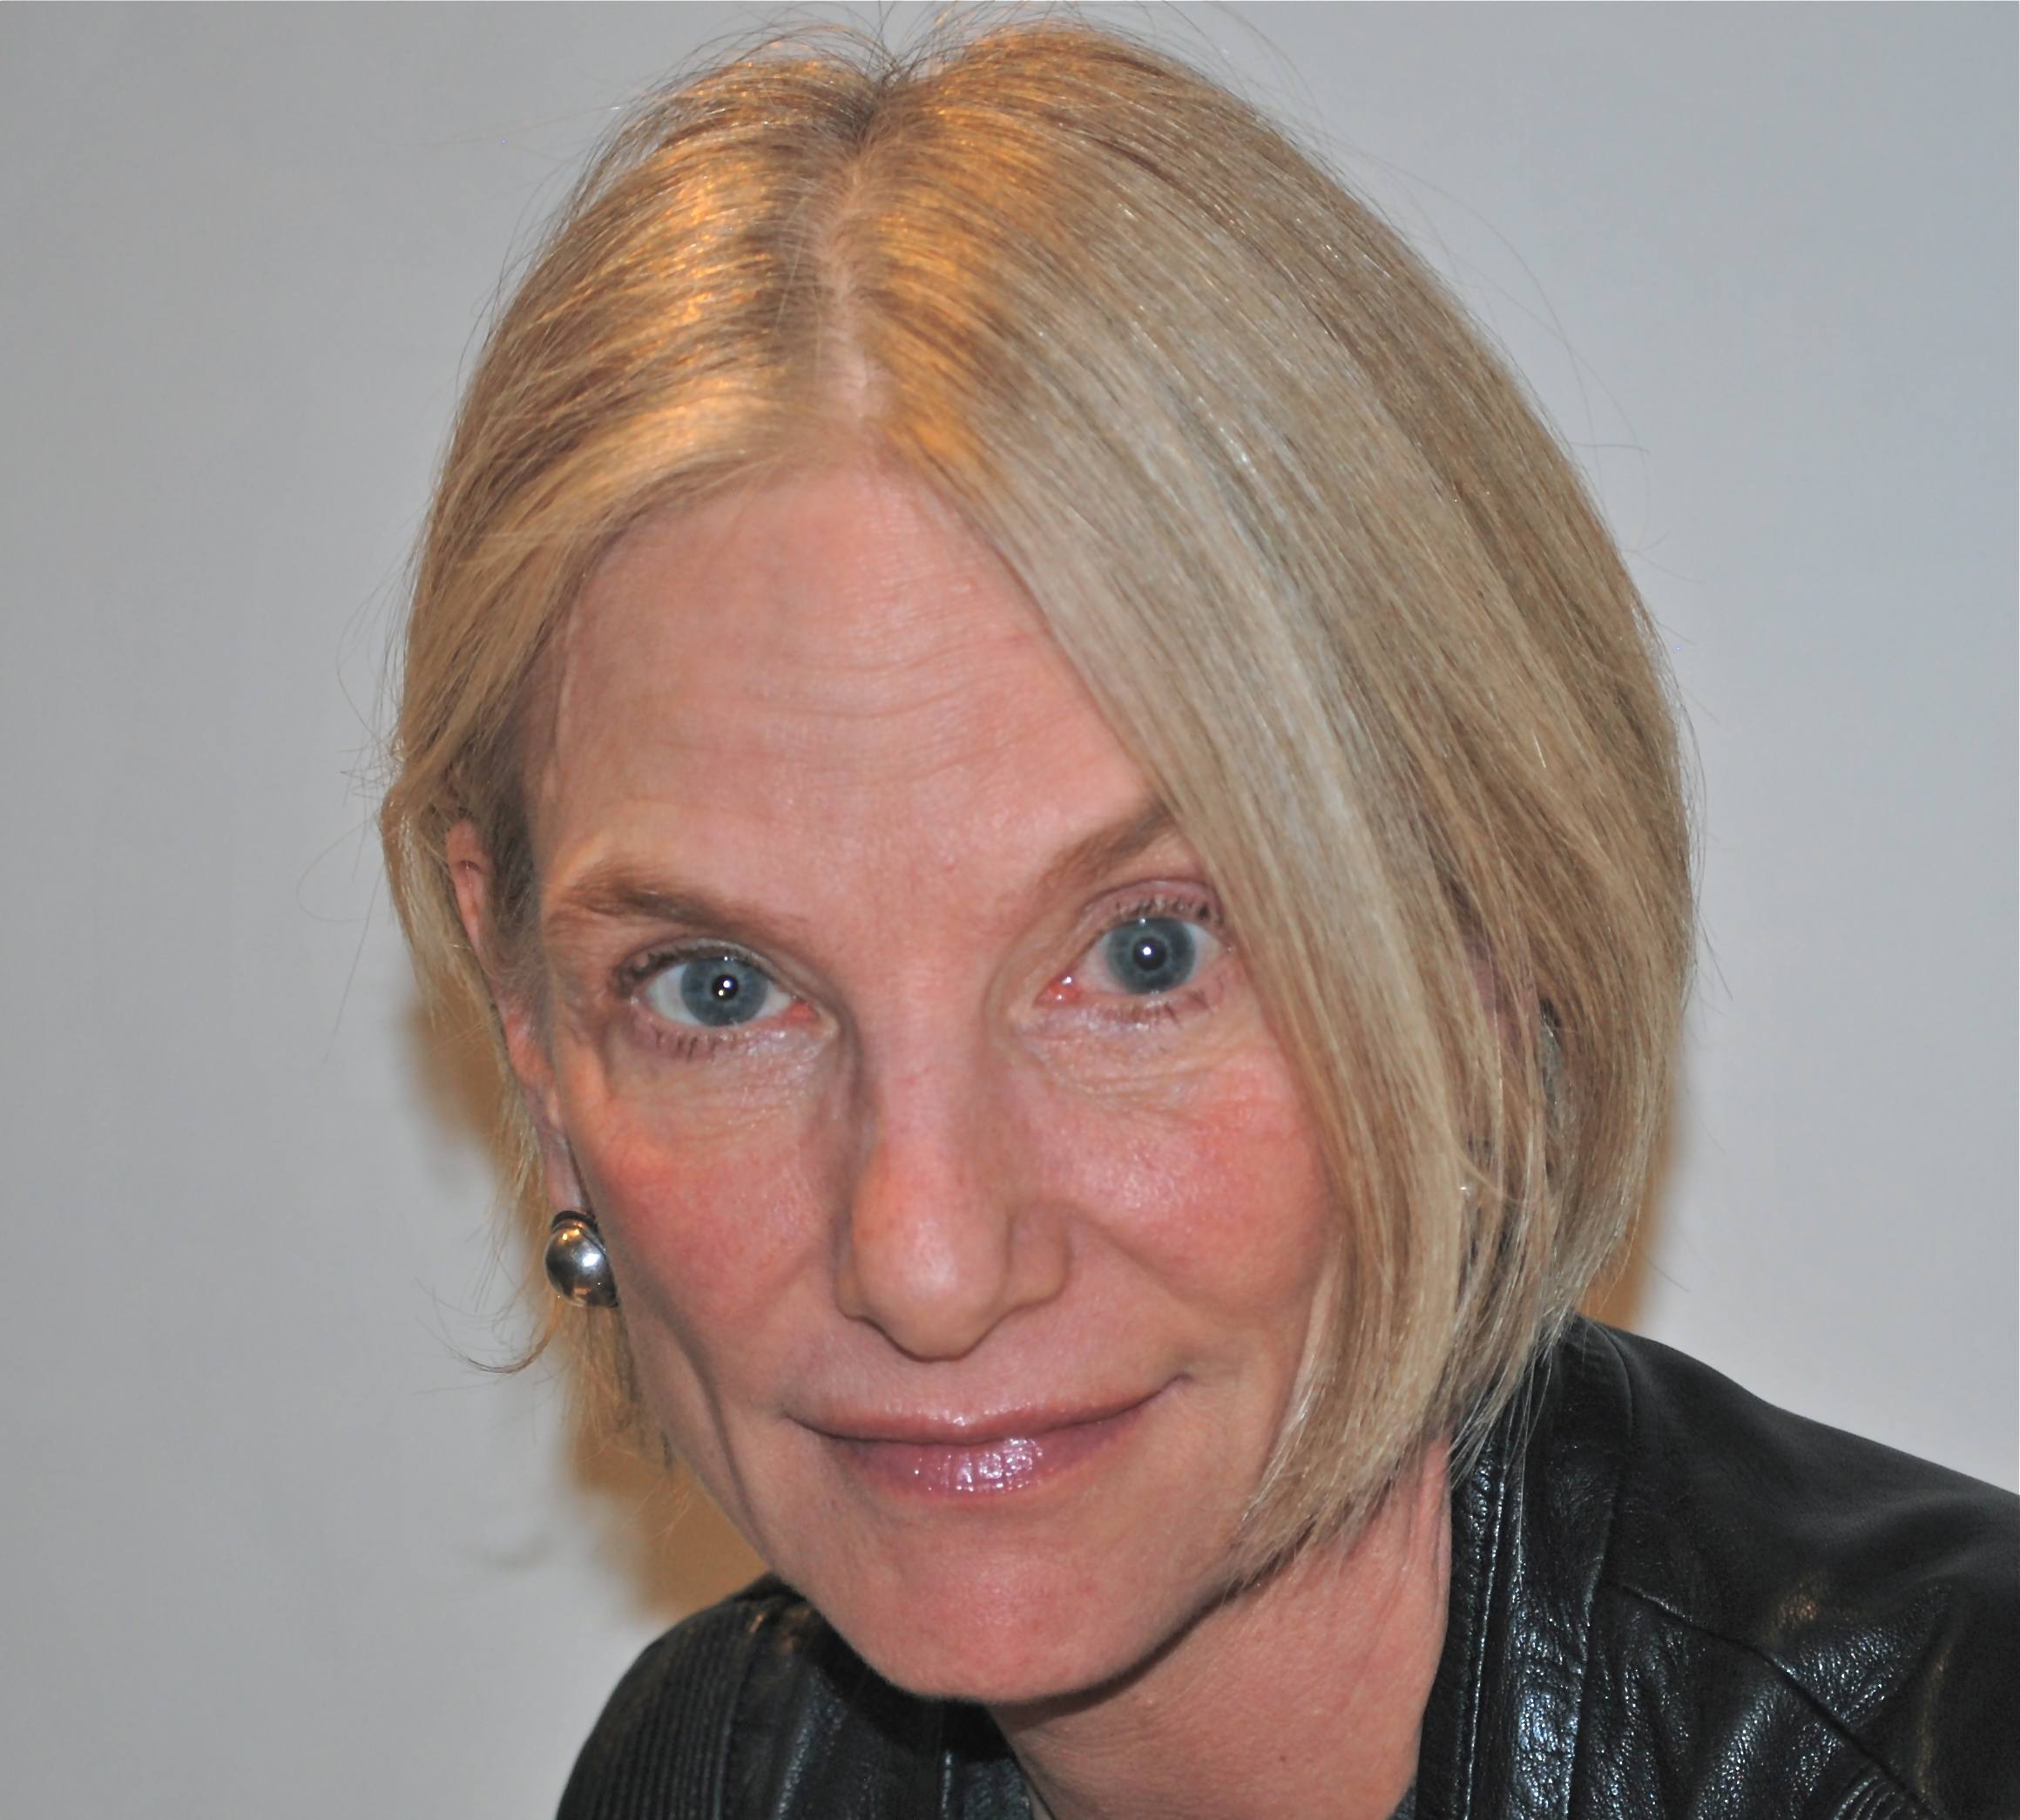 A portrait photograph of Pamela Auchincloss